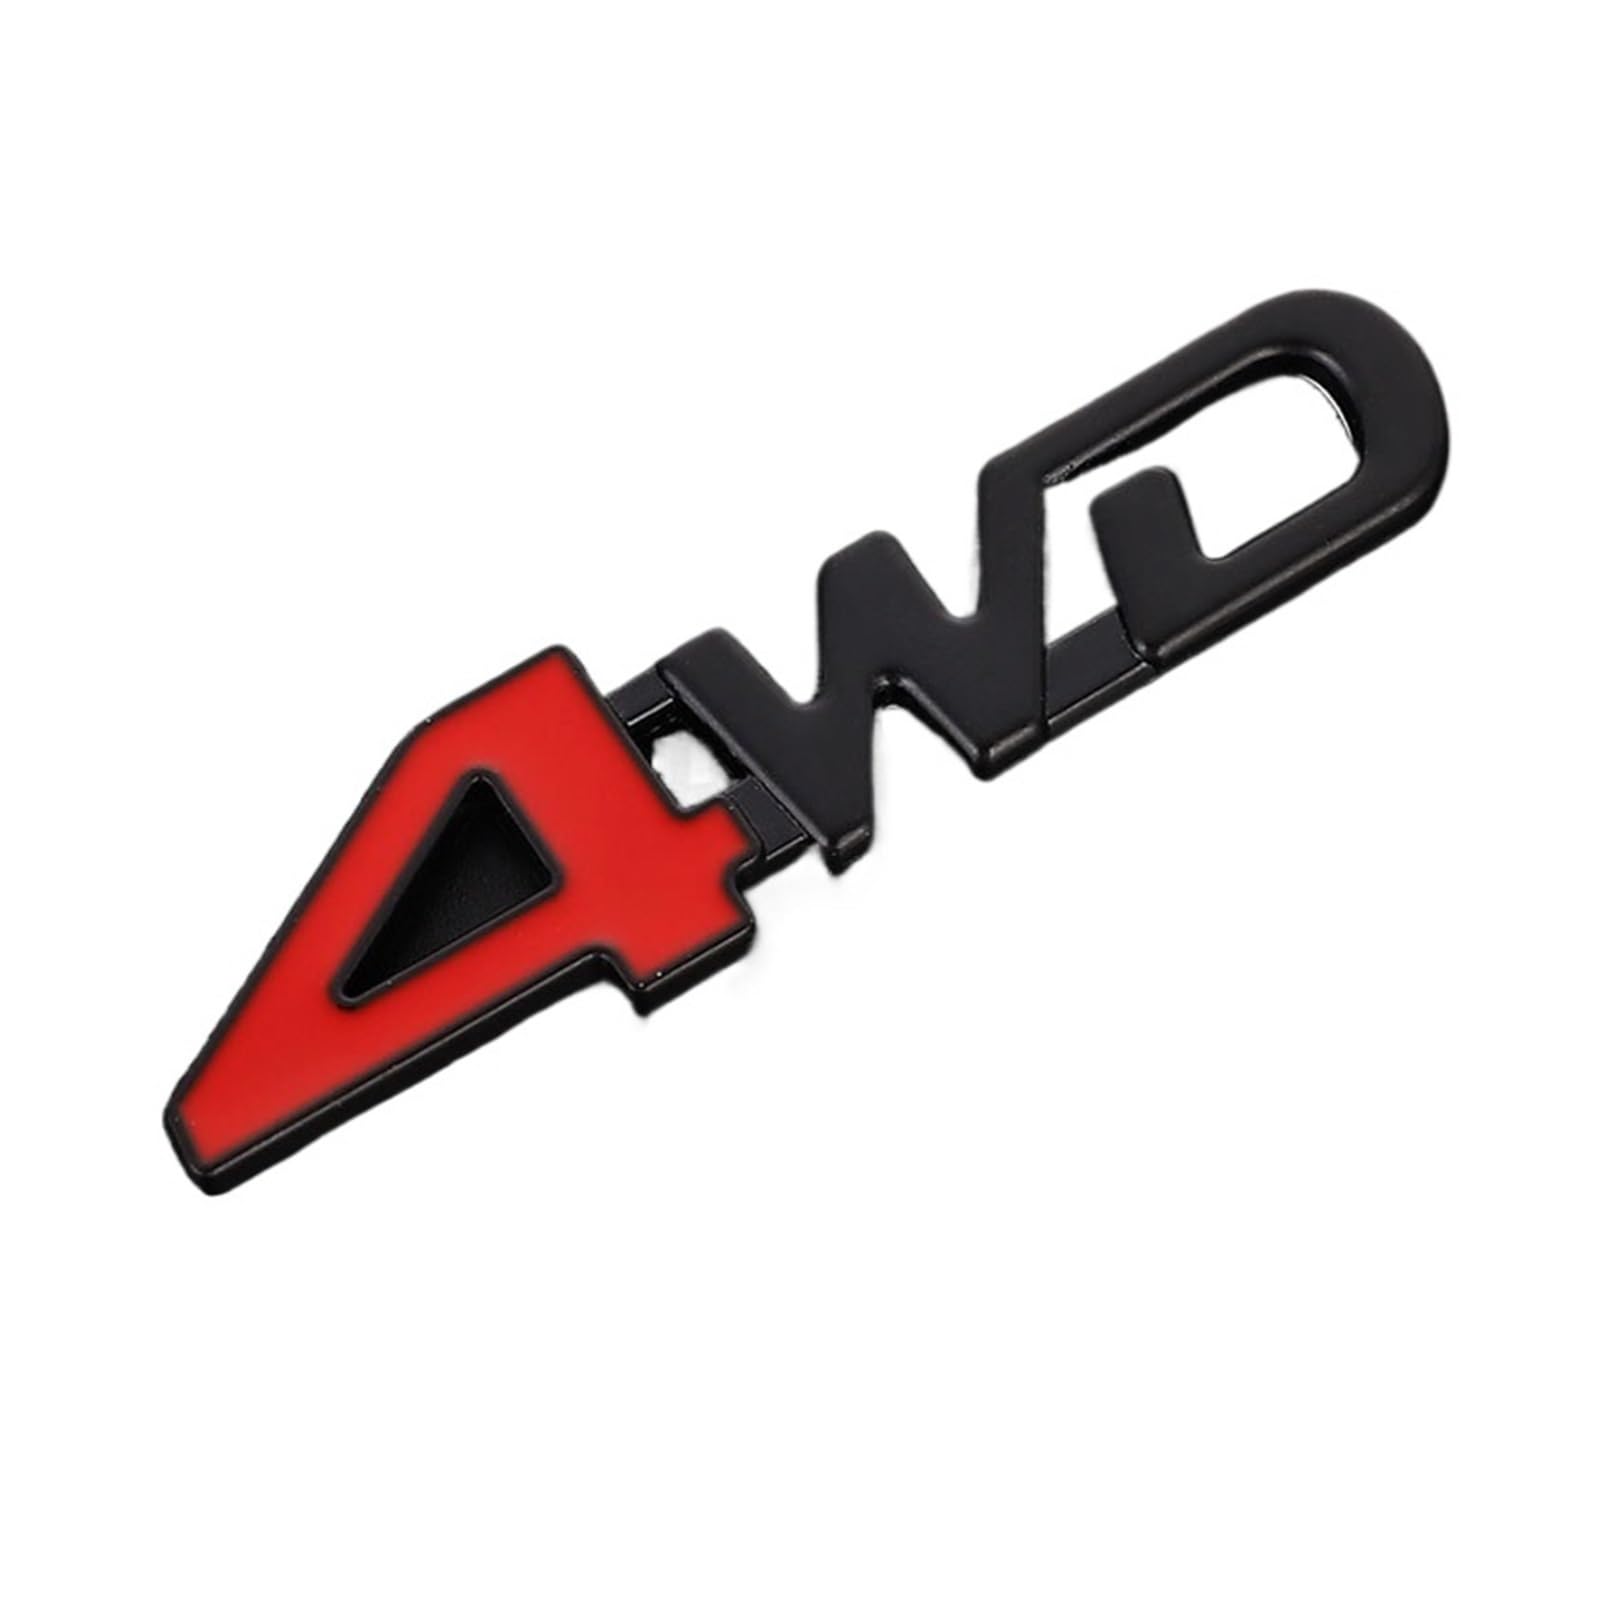 AQXYWQOL 3D-Metallaufkleber, 4WD-Emblem, 4x4-Abzeichen, kompatibel mit ASX CRV, Accord, Civic, Grand Vitara, Swift Farbe ist konstant, verblasst nicht und beschädigt(Black) von AQXYWQOL